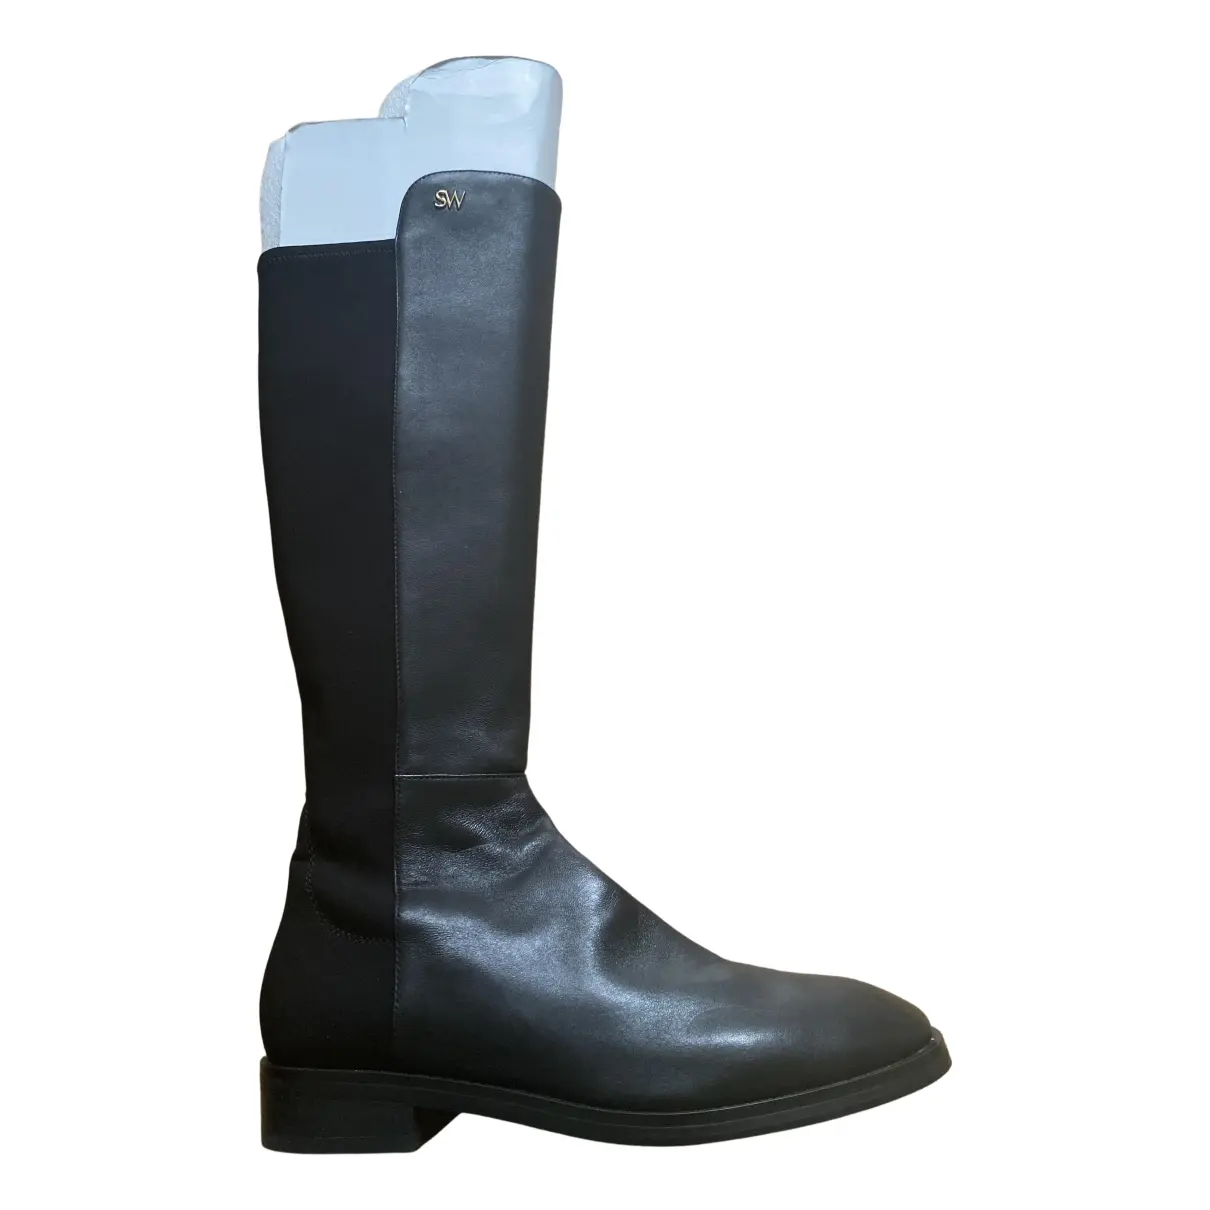 Patent leather boots Stuart Weitzman